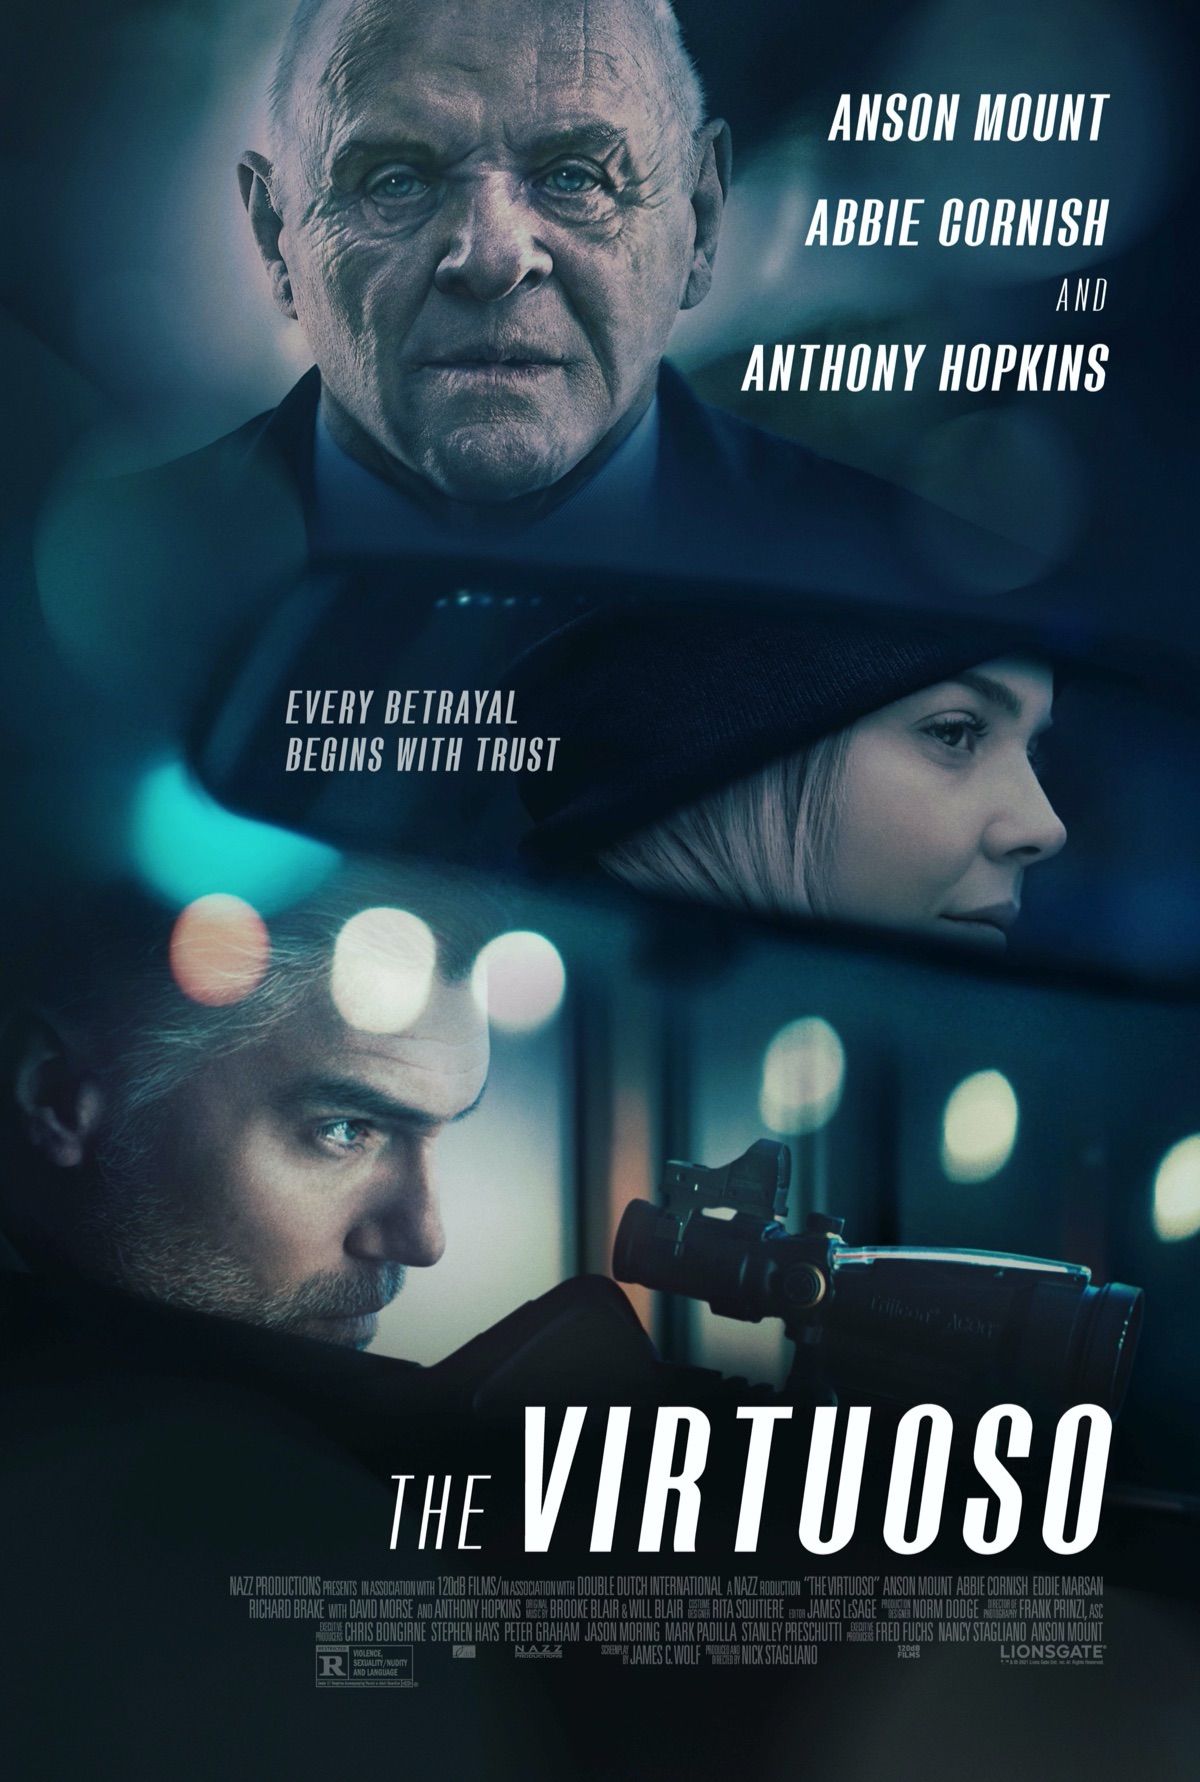 The Virtuoso Anthony Hopkins poster